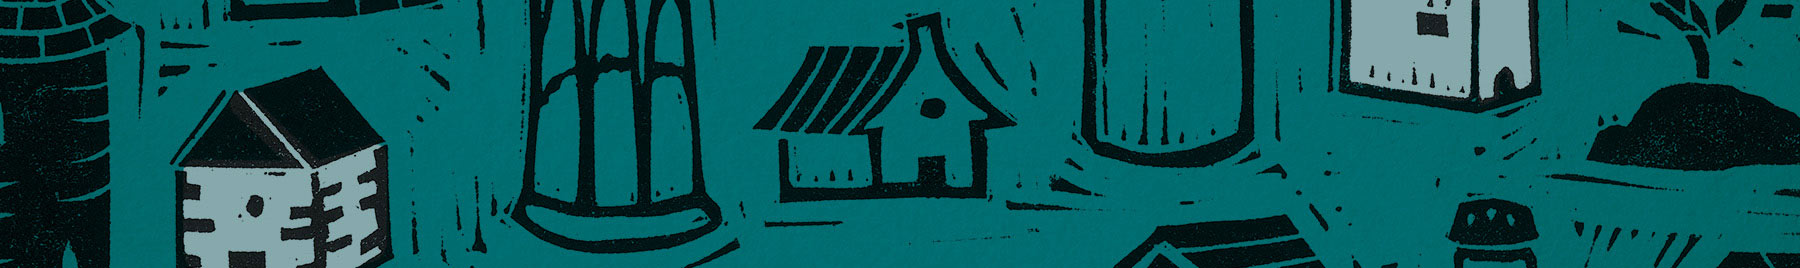 linocut illustration of houses